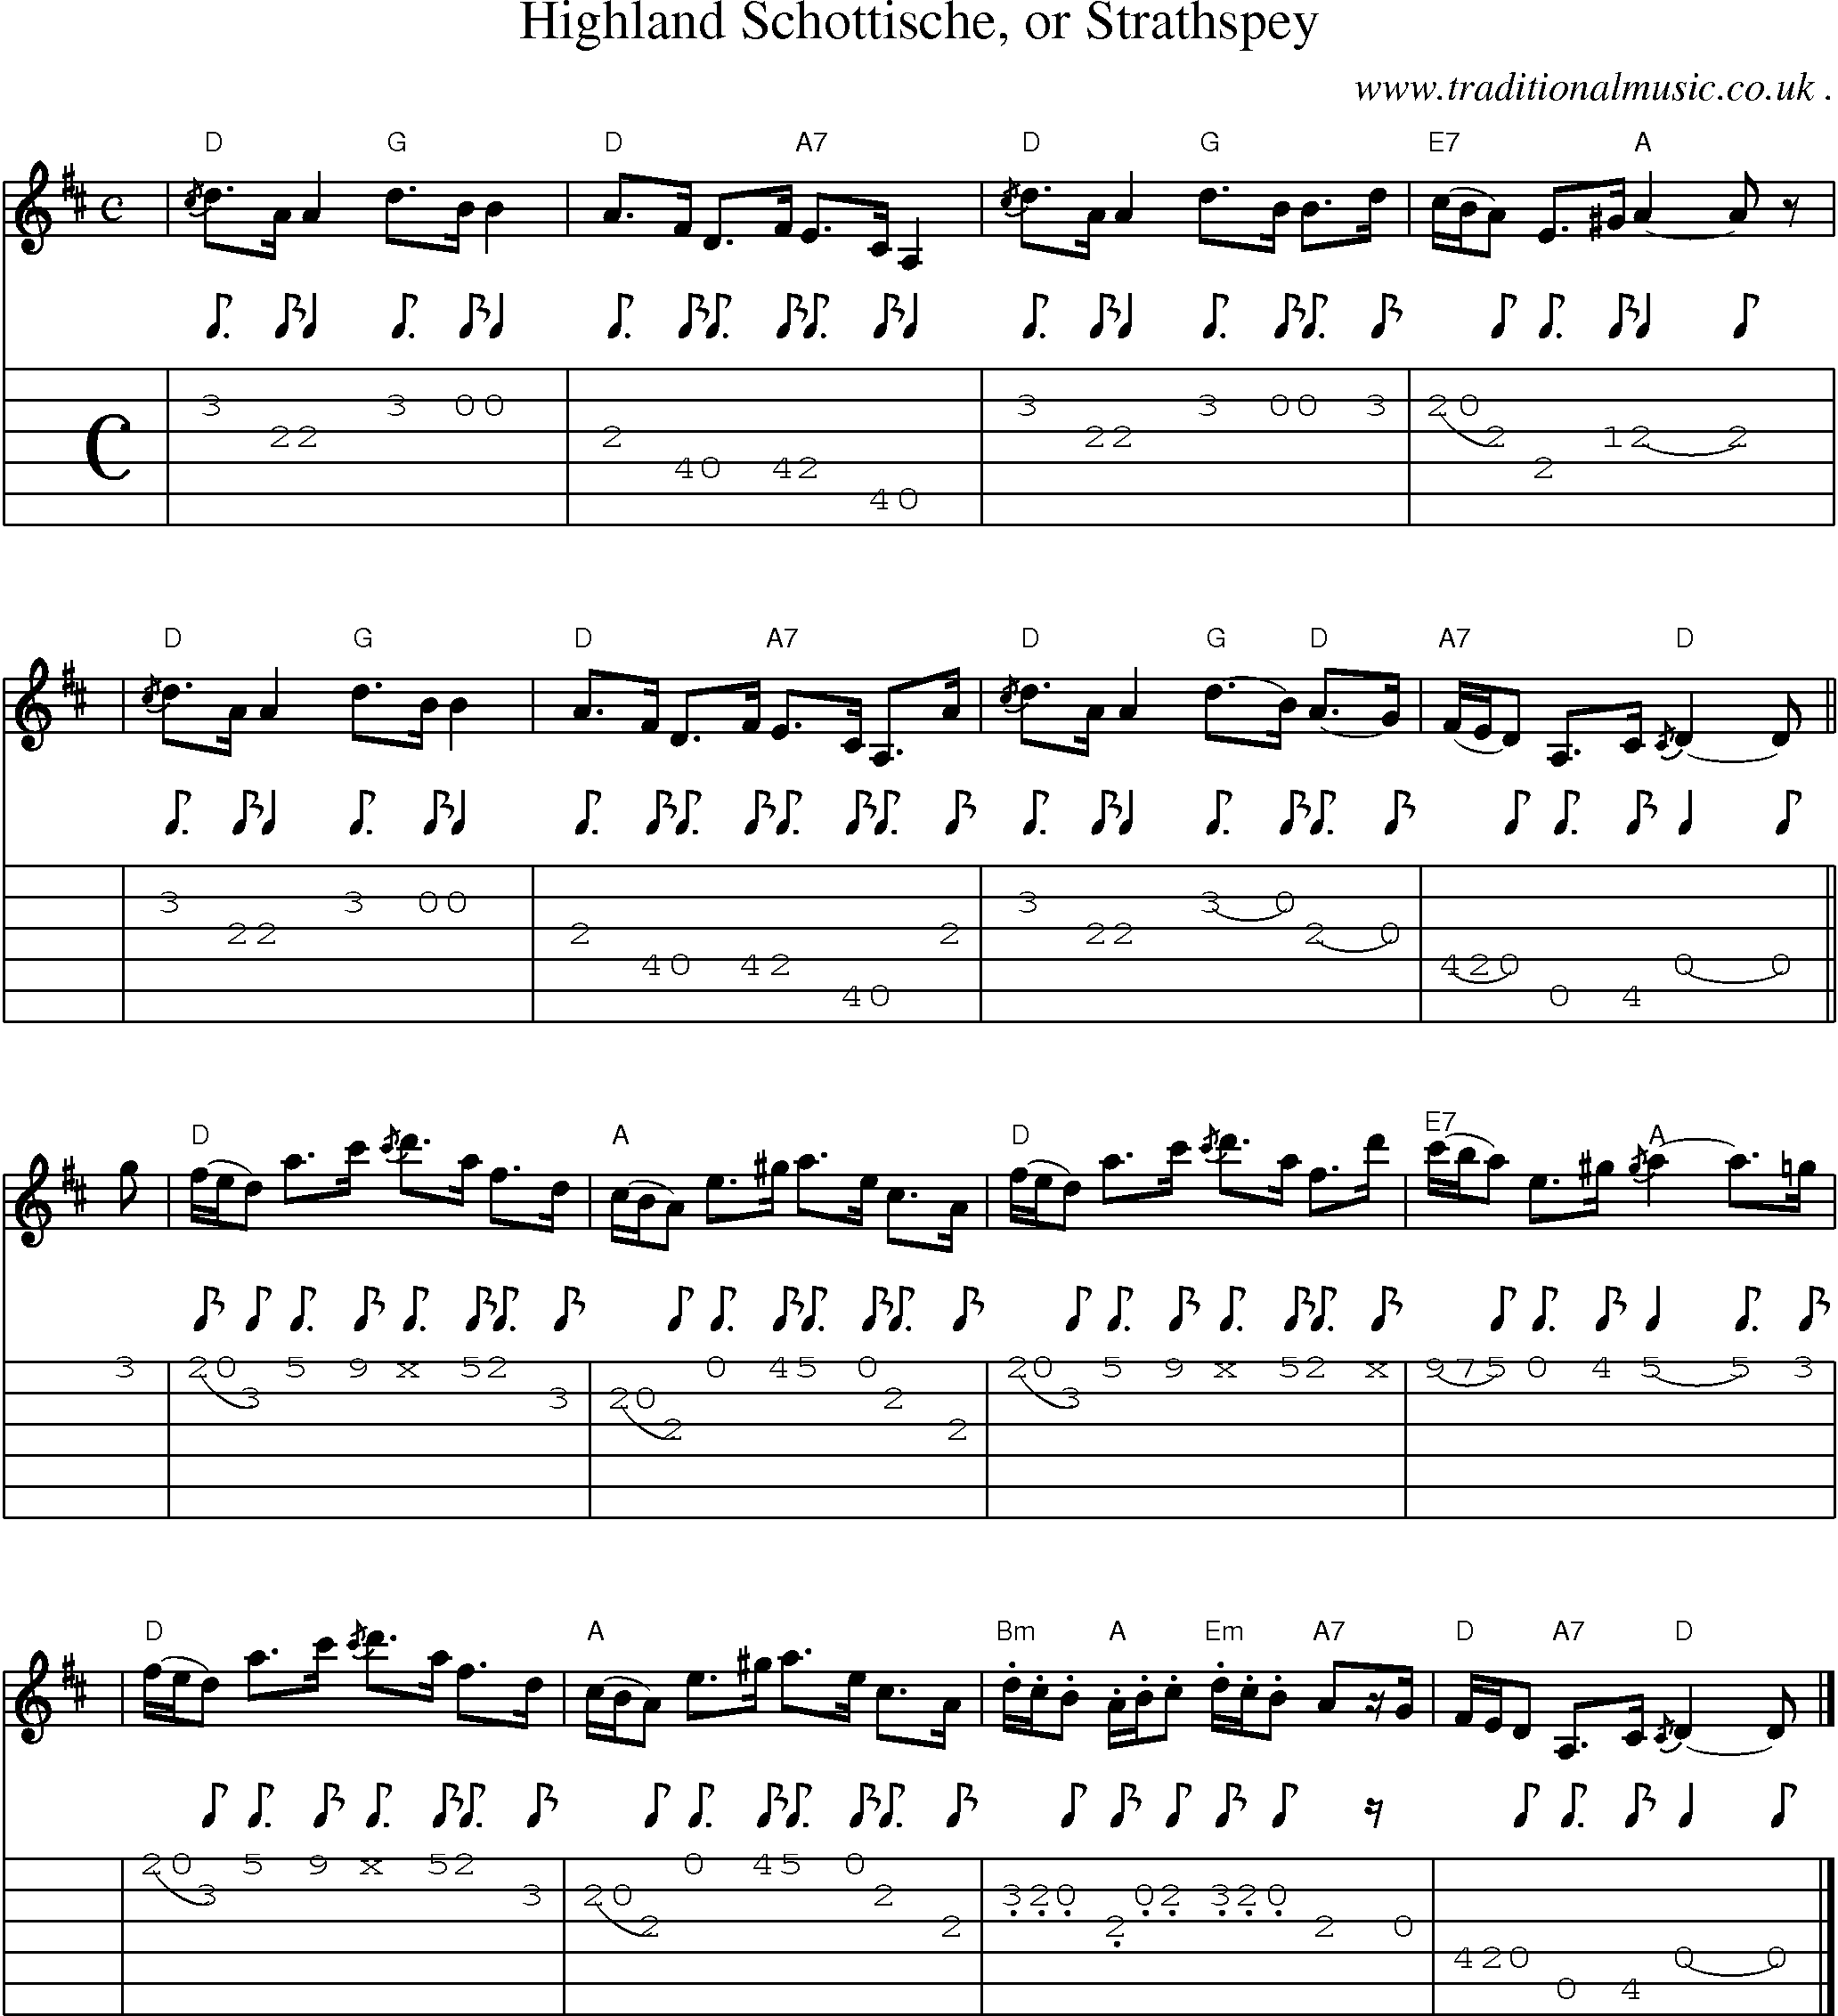 Sheet-music  score, Chords and Guitar Tabs for Highland Schottische Or Strathspey